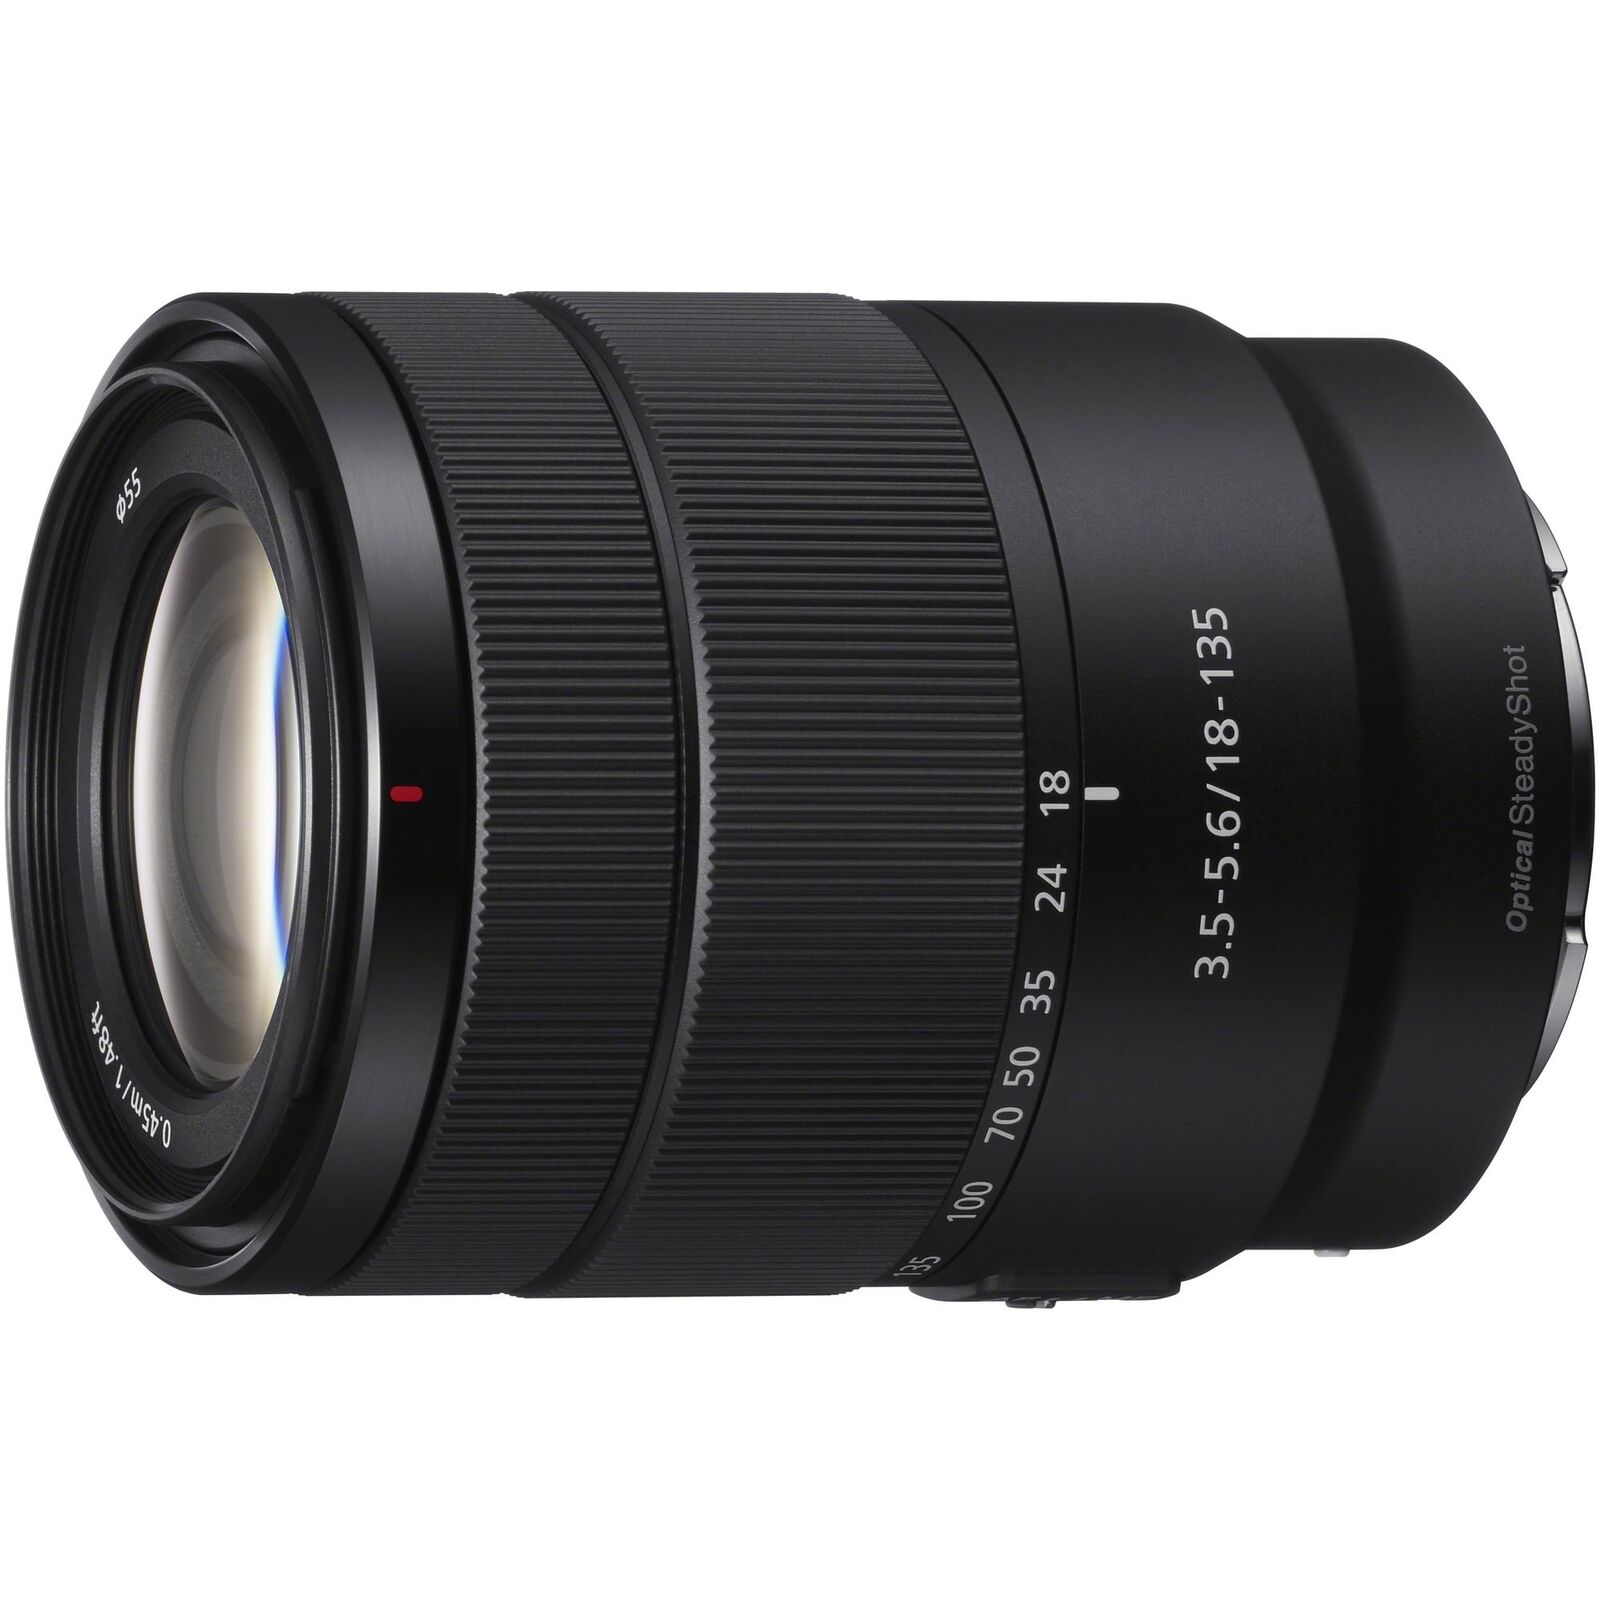 Sony High Magnification Zoom Lens Aps-C E 18-135Mm F3.5-5.6 Oss Lens SEL18135